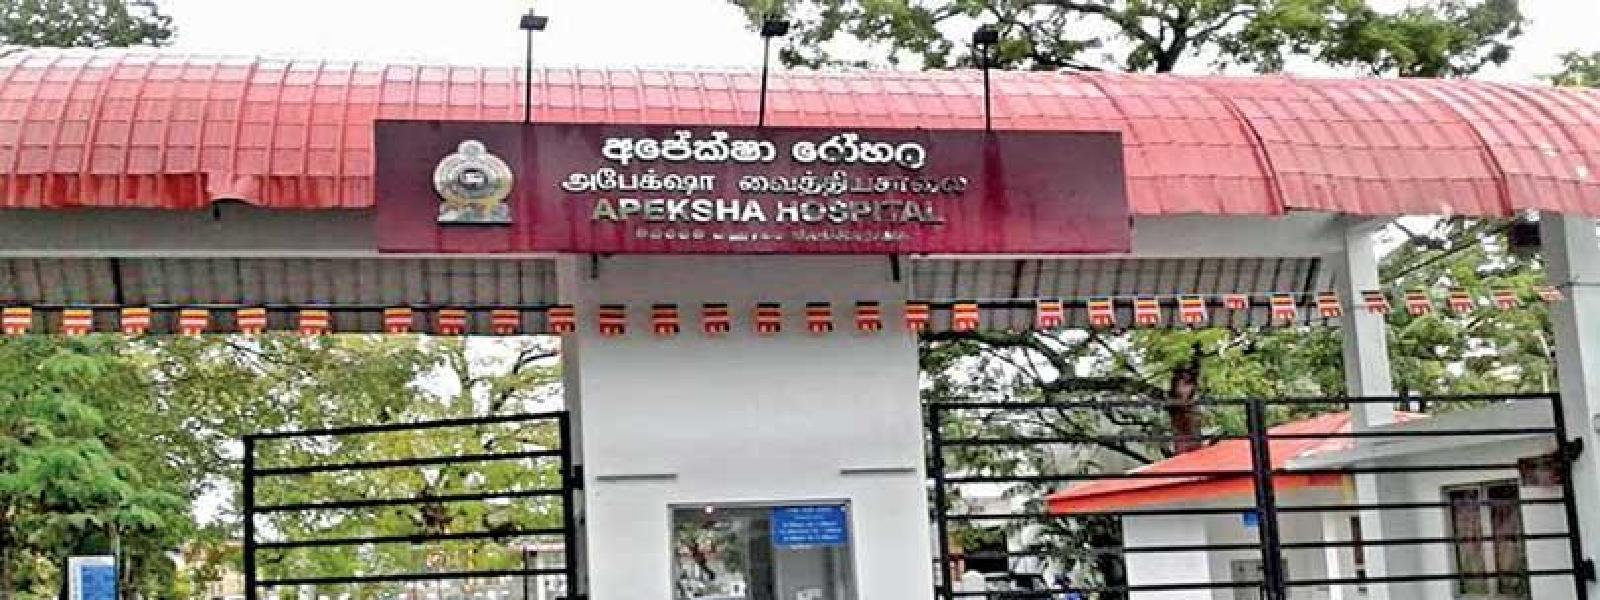 Radiotherapy at Apeksha Hospital from Monday (29)